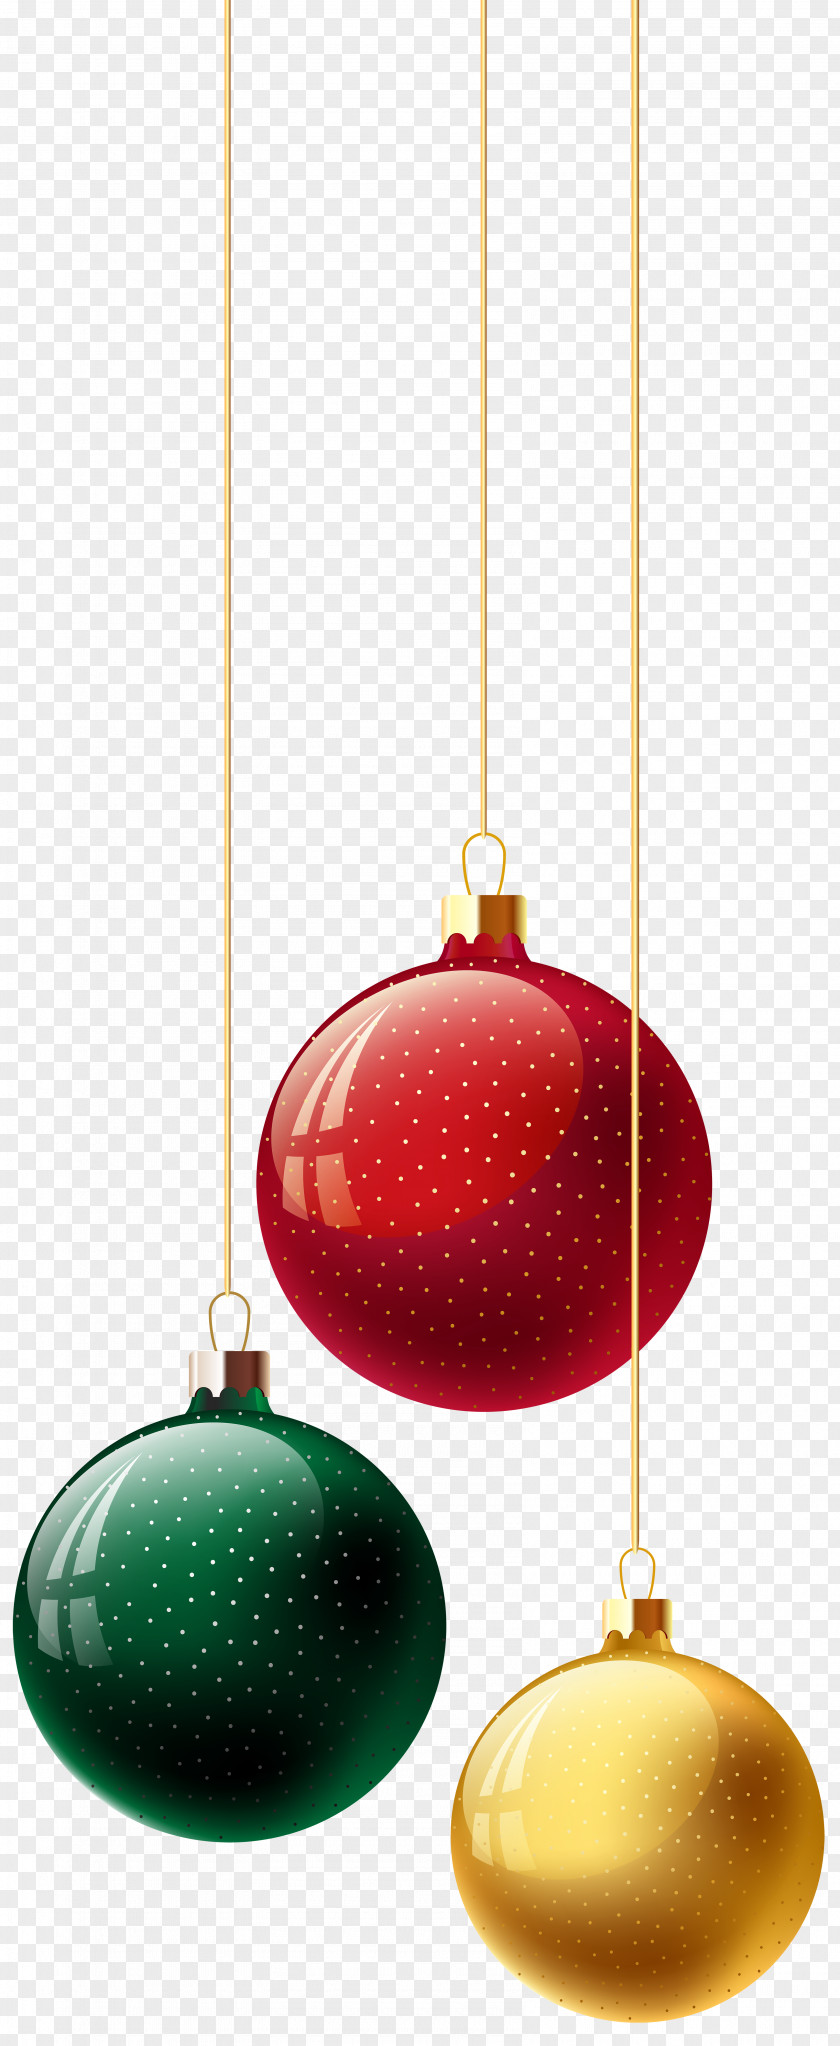 Christmas Balls Transparent Image Ornament Design Product PNG